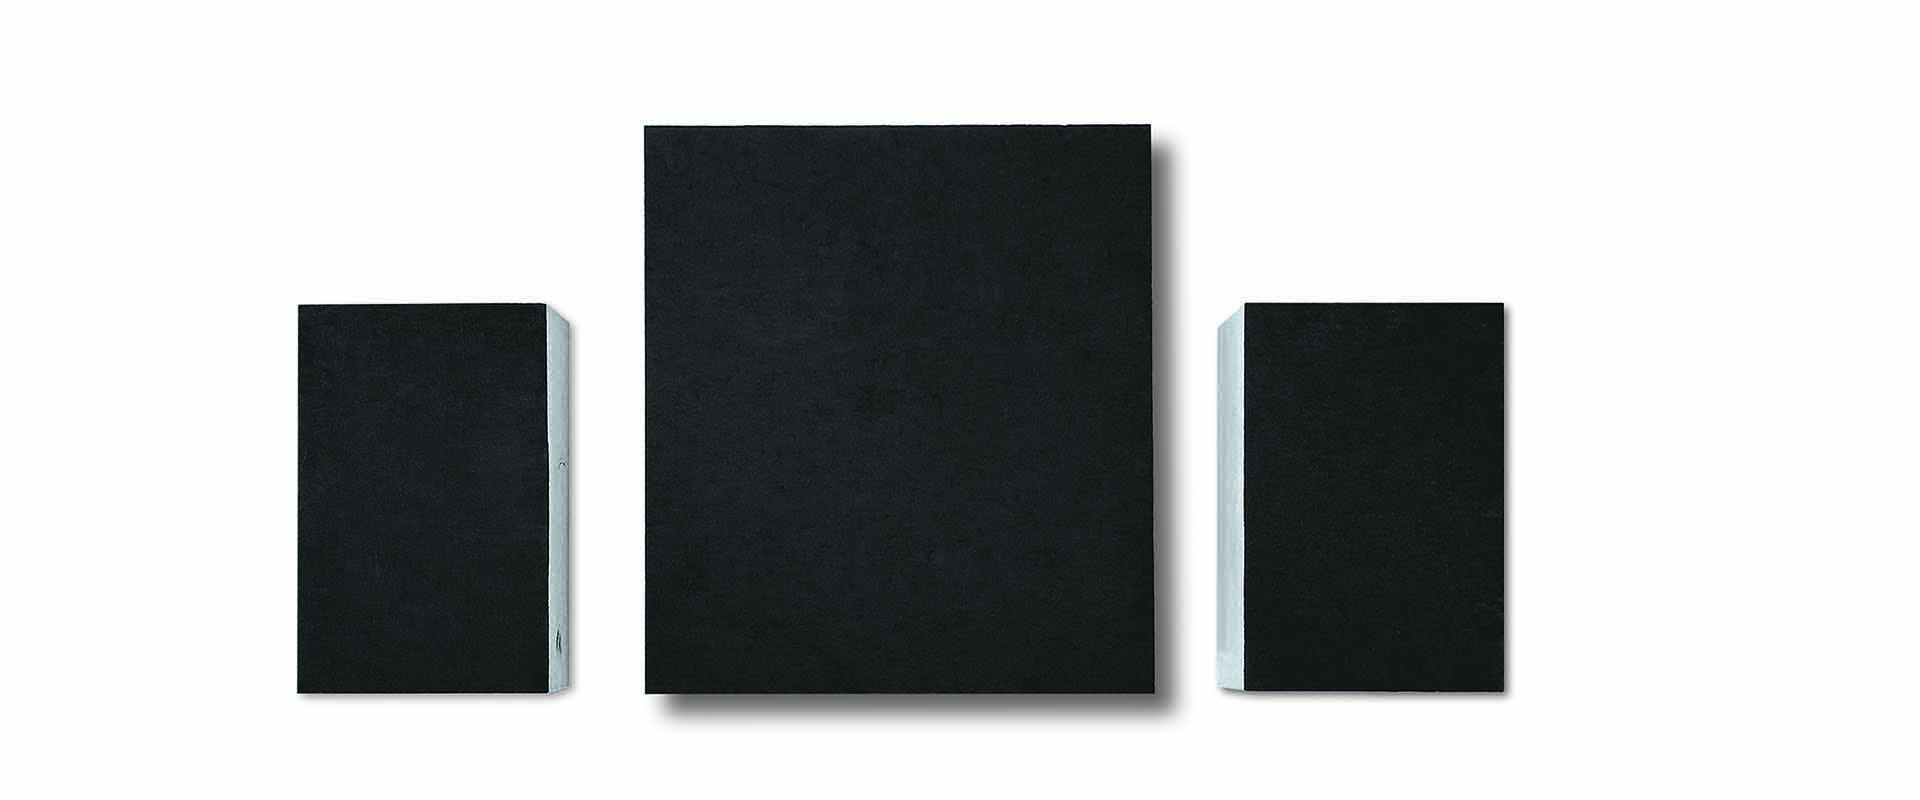 Ohne Titel - 2020, Pigment auf Pietra Serena, 21 x 14 cm, 30,5 x 27,4 cm, 21 x 14 cm